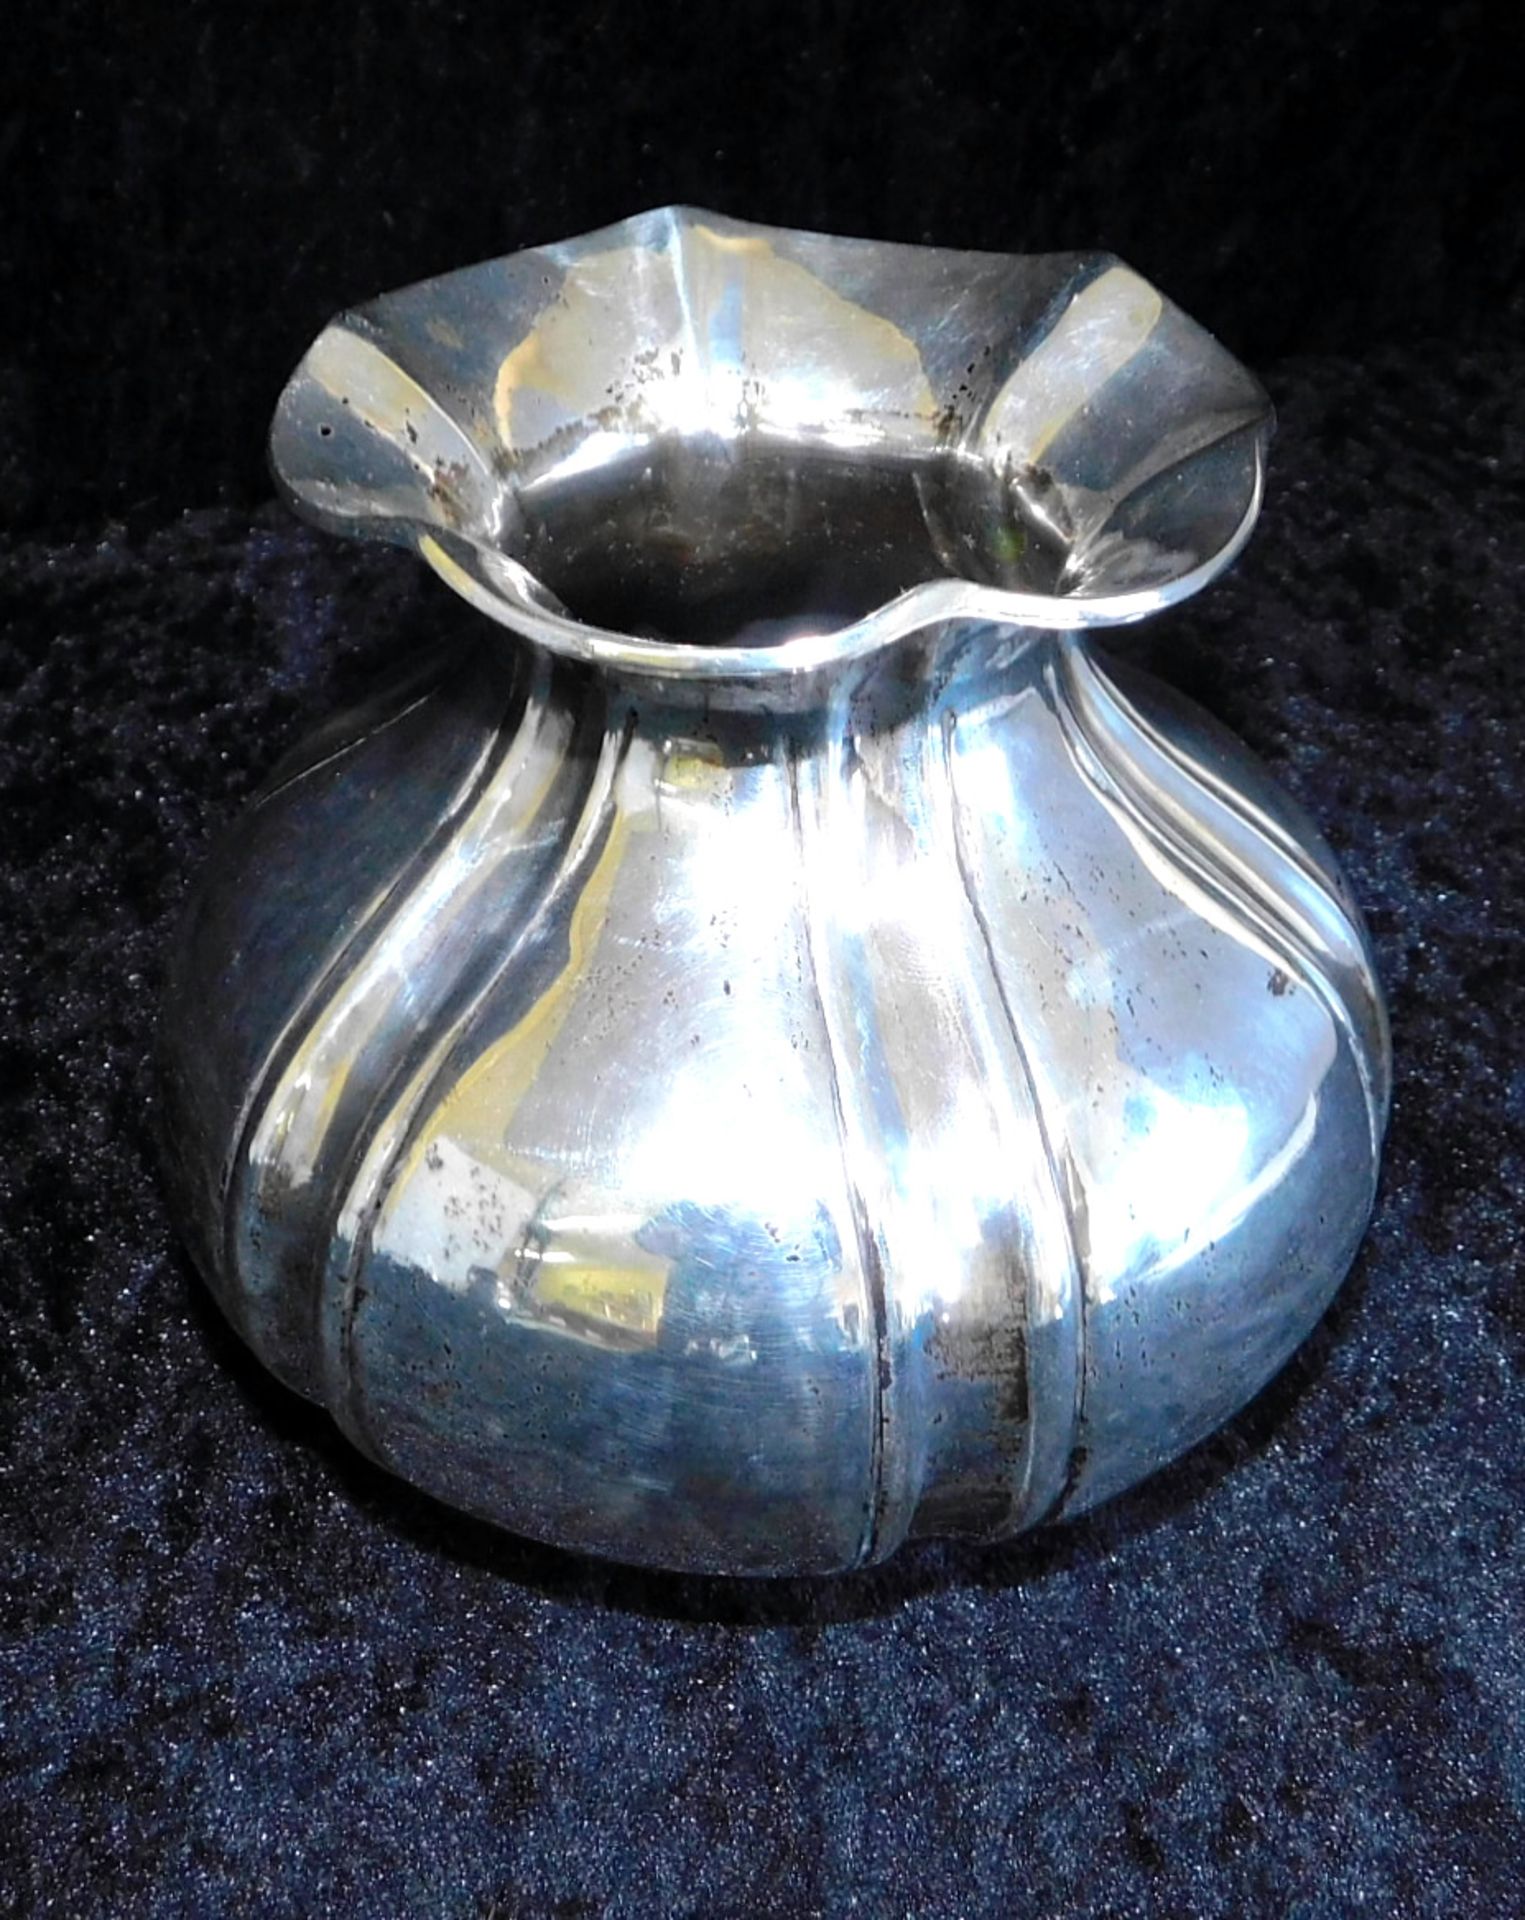 Vase Silber, AK 900 gepunzt, Biedermeier um 1830, Gewicht 243 g, Höhe 11 cm, Ø oberer Rand 9 c - Image 3 of 3